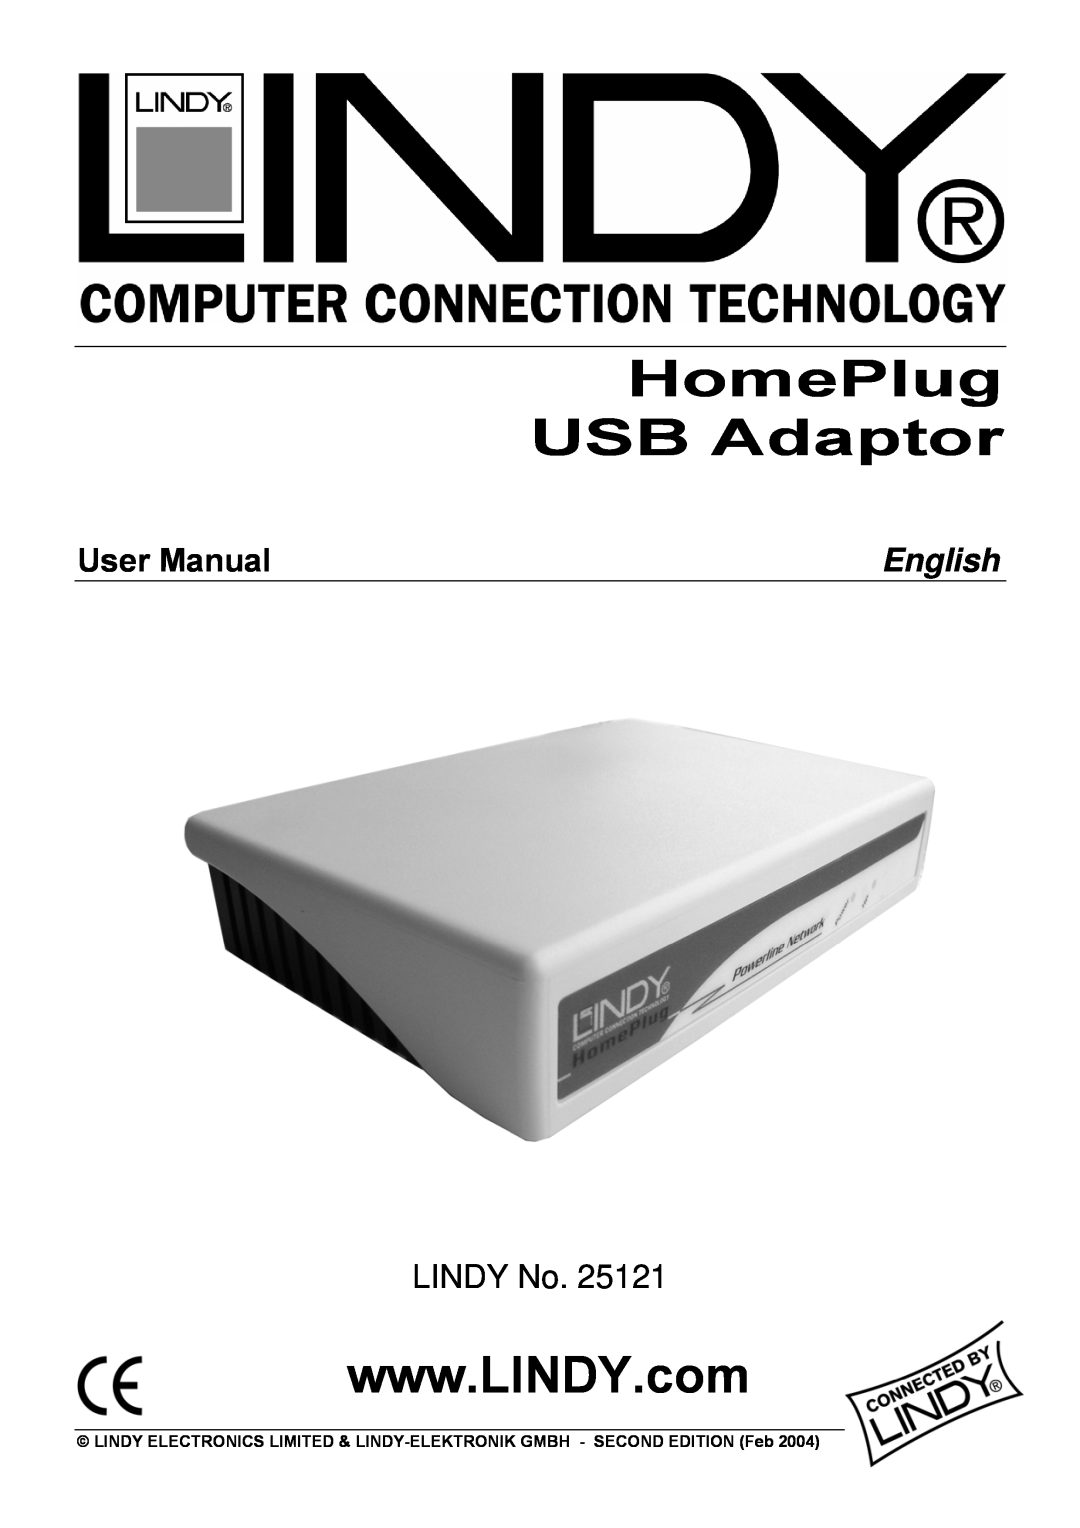 Lindy 25121 user manual English, HomePlug USB Adaptor, User Manual, LINDY No 